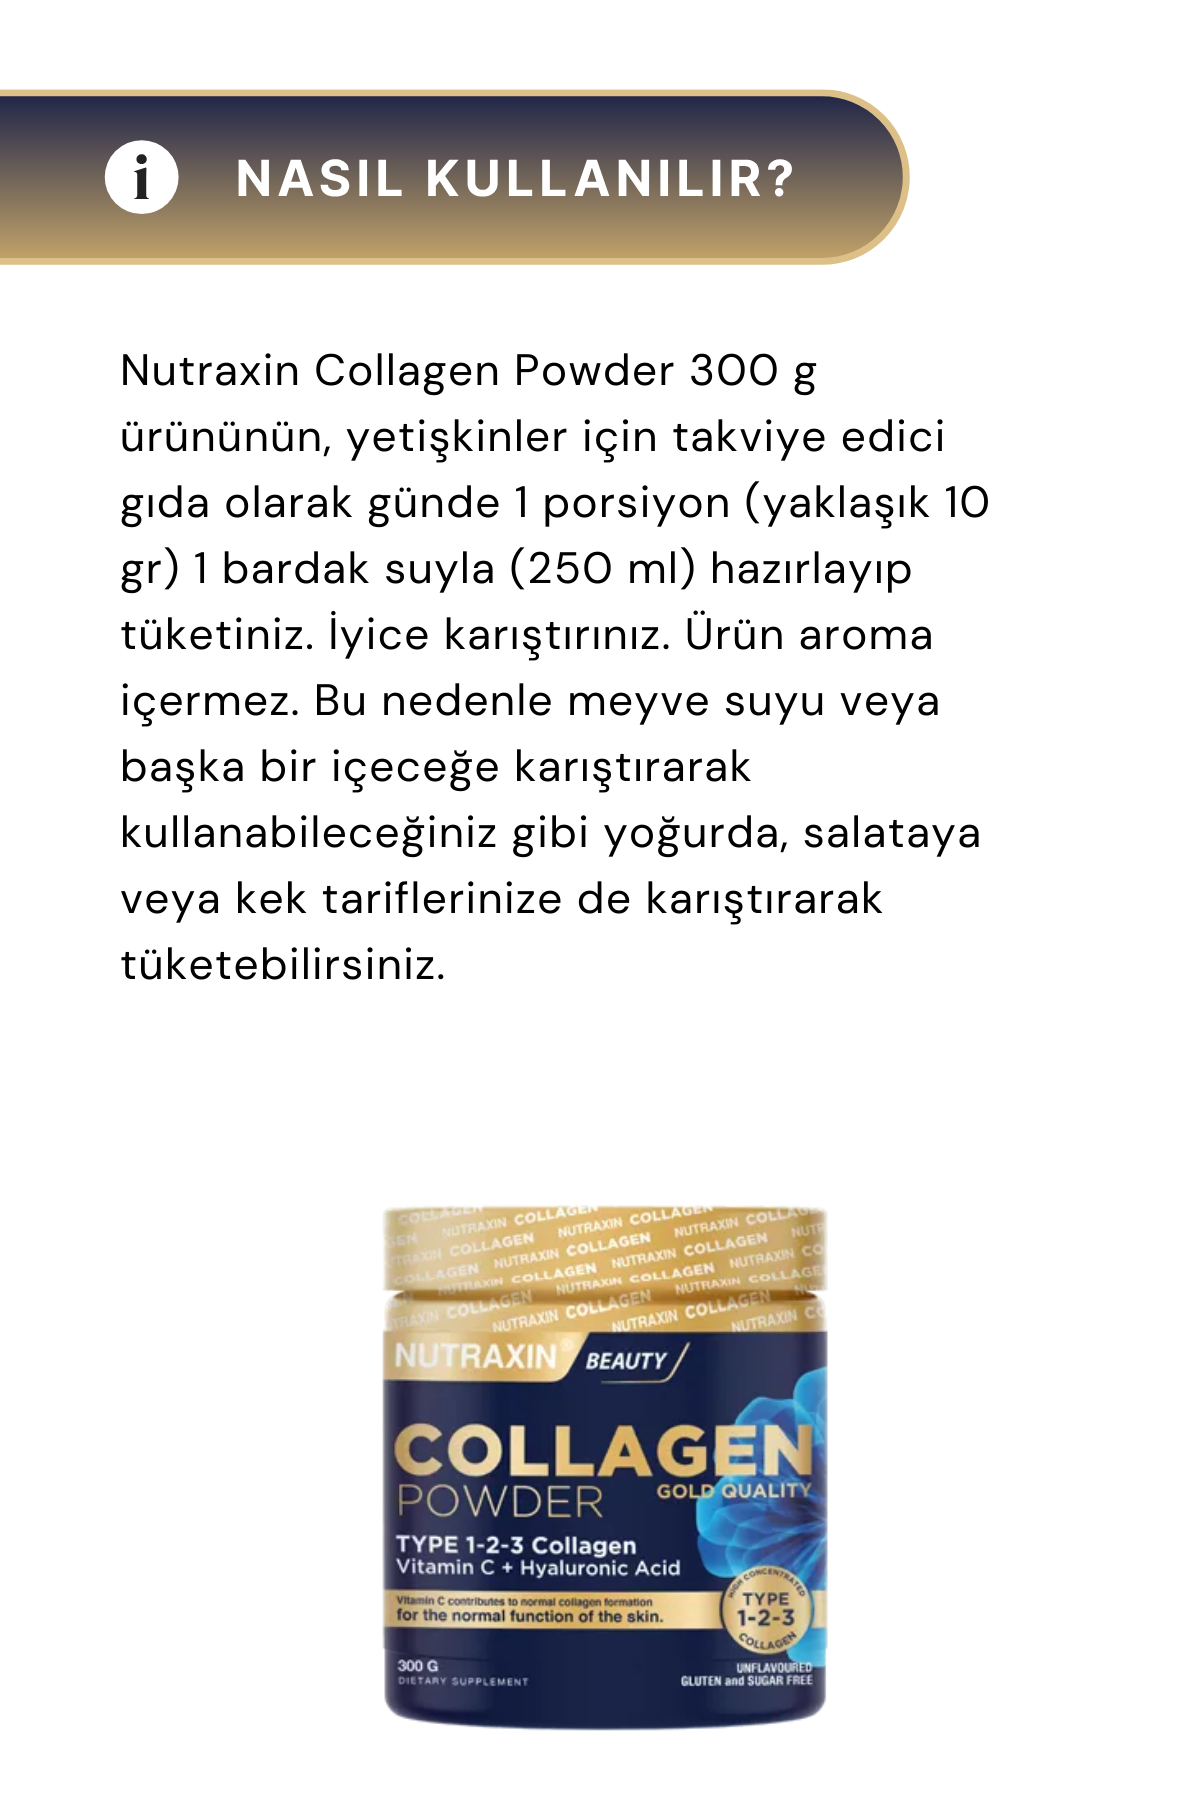 Nutraxin Collagen Powder Gold Quality 300 gr 3'lü Paket